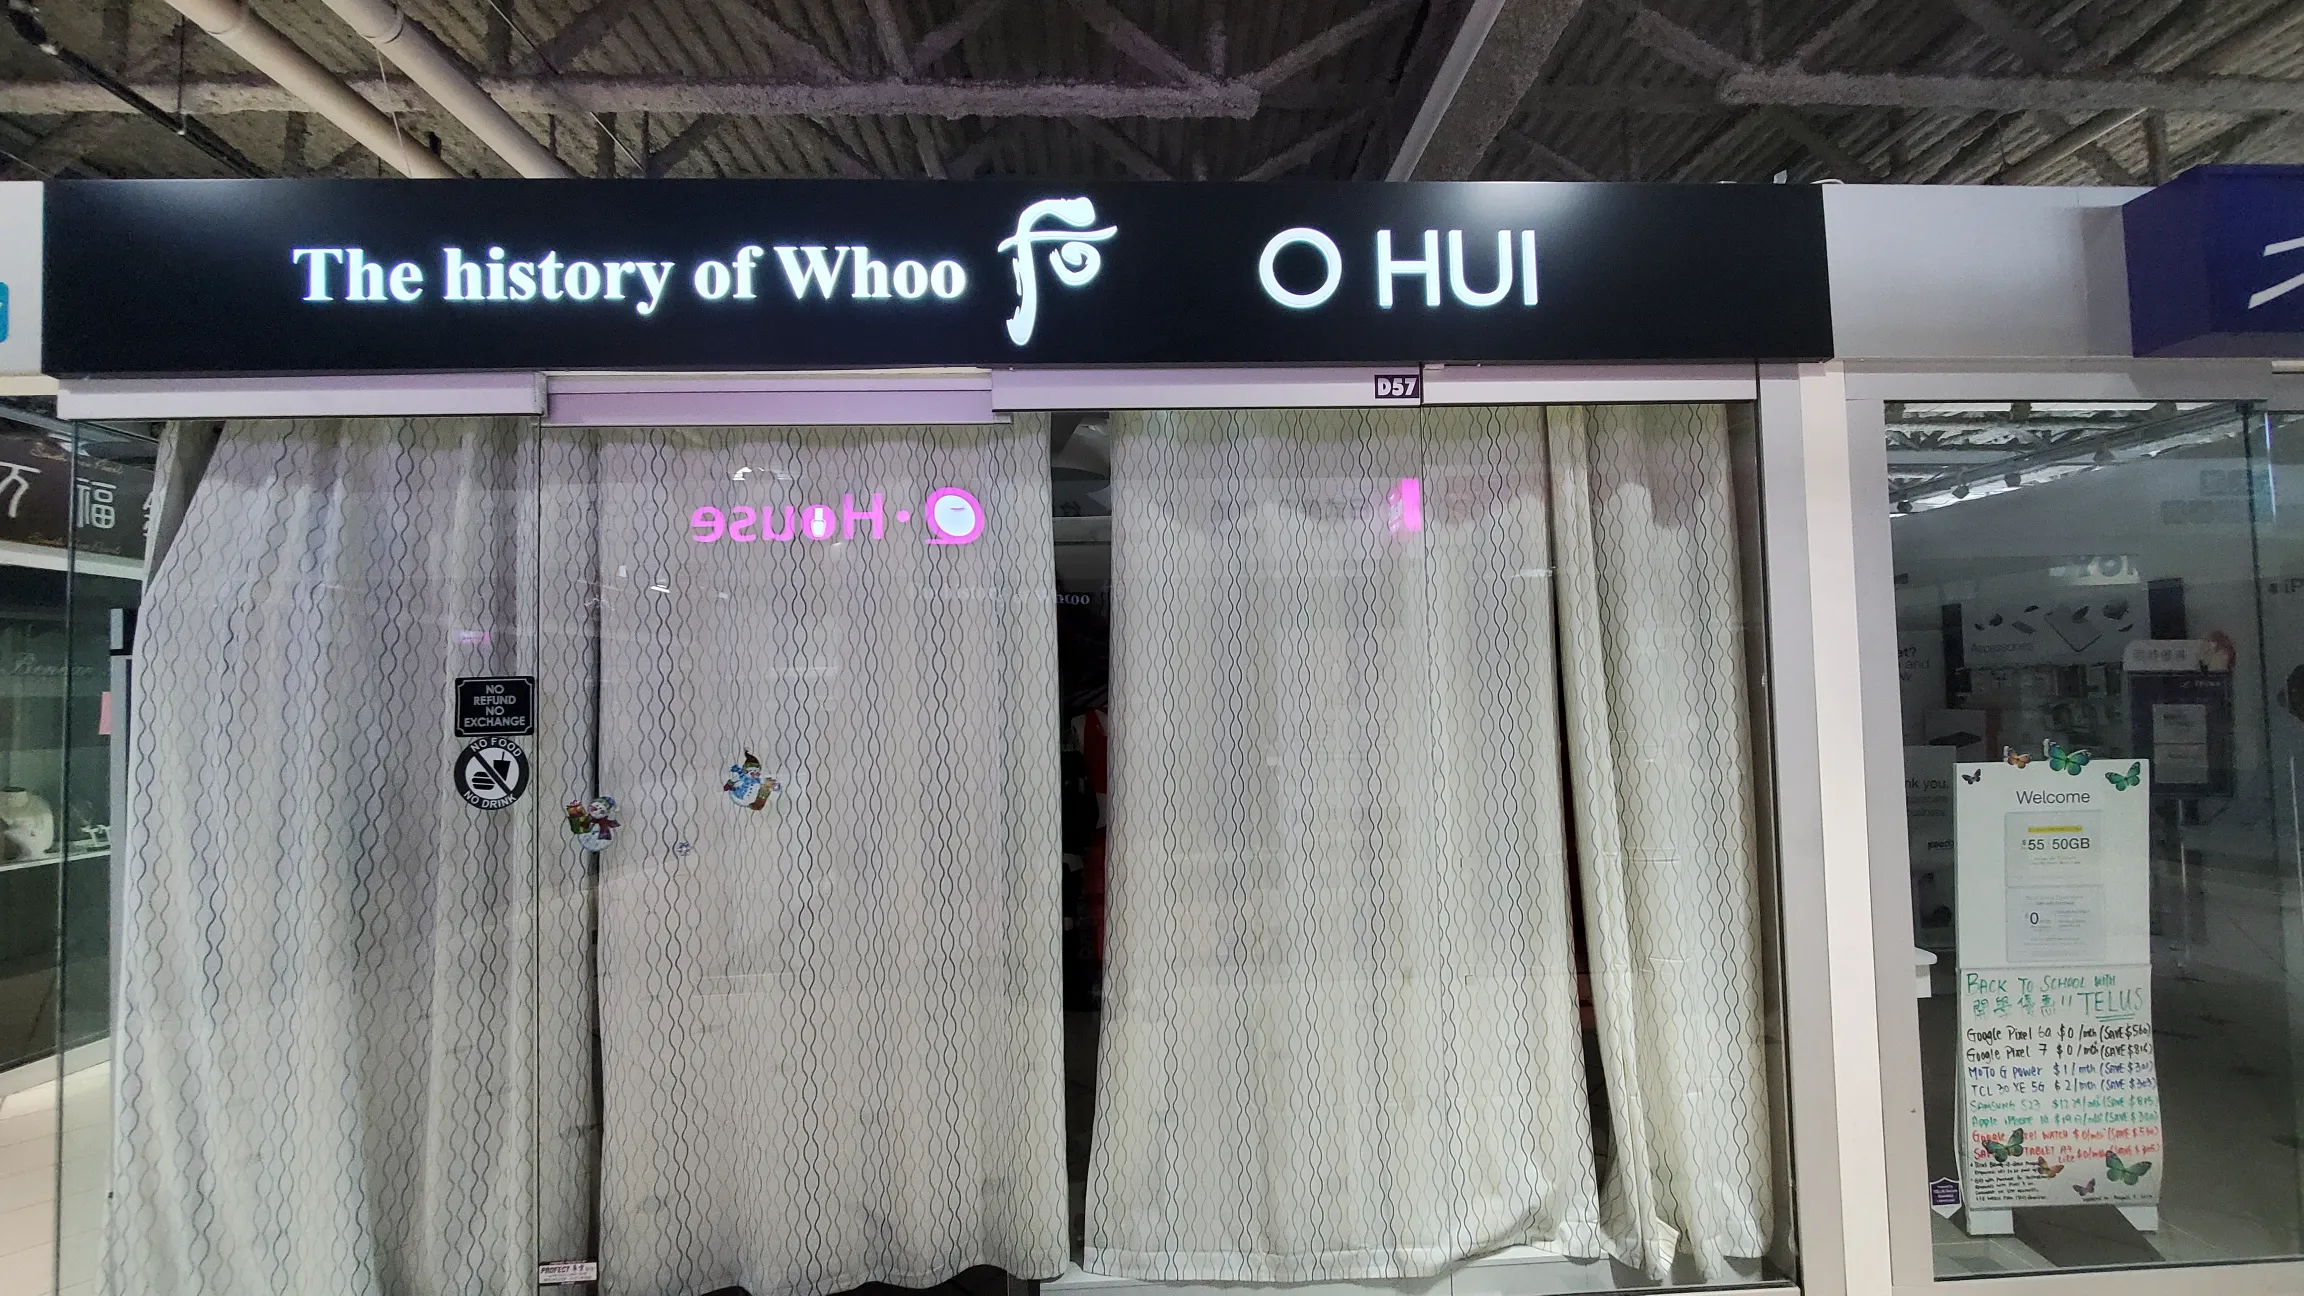 History of Whoo Ohu